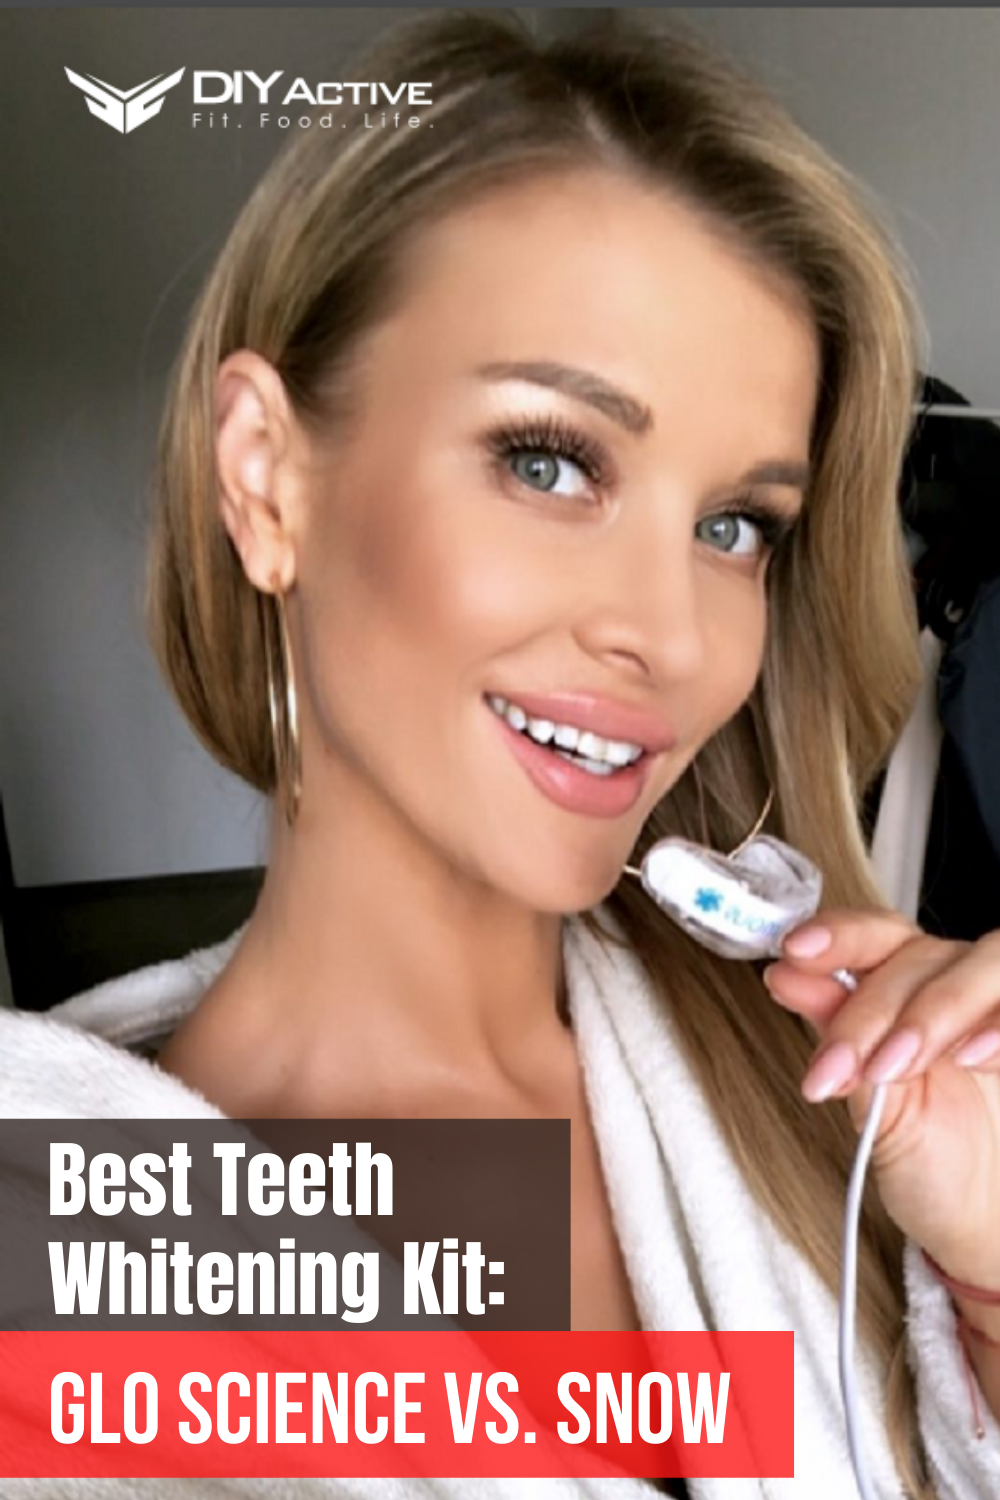 Best Teeth Whitening Kit: GLO Science Vs. SNOW